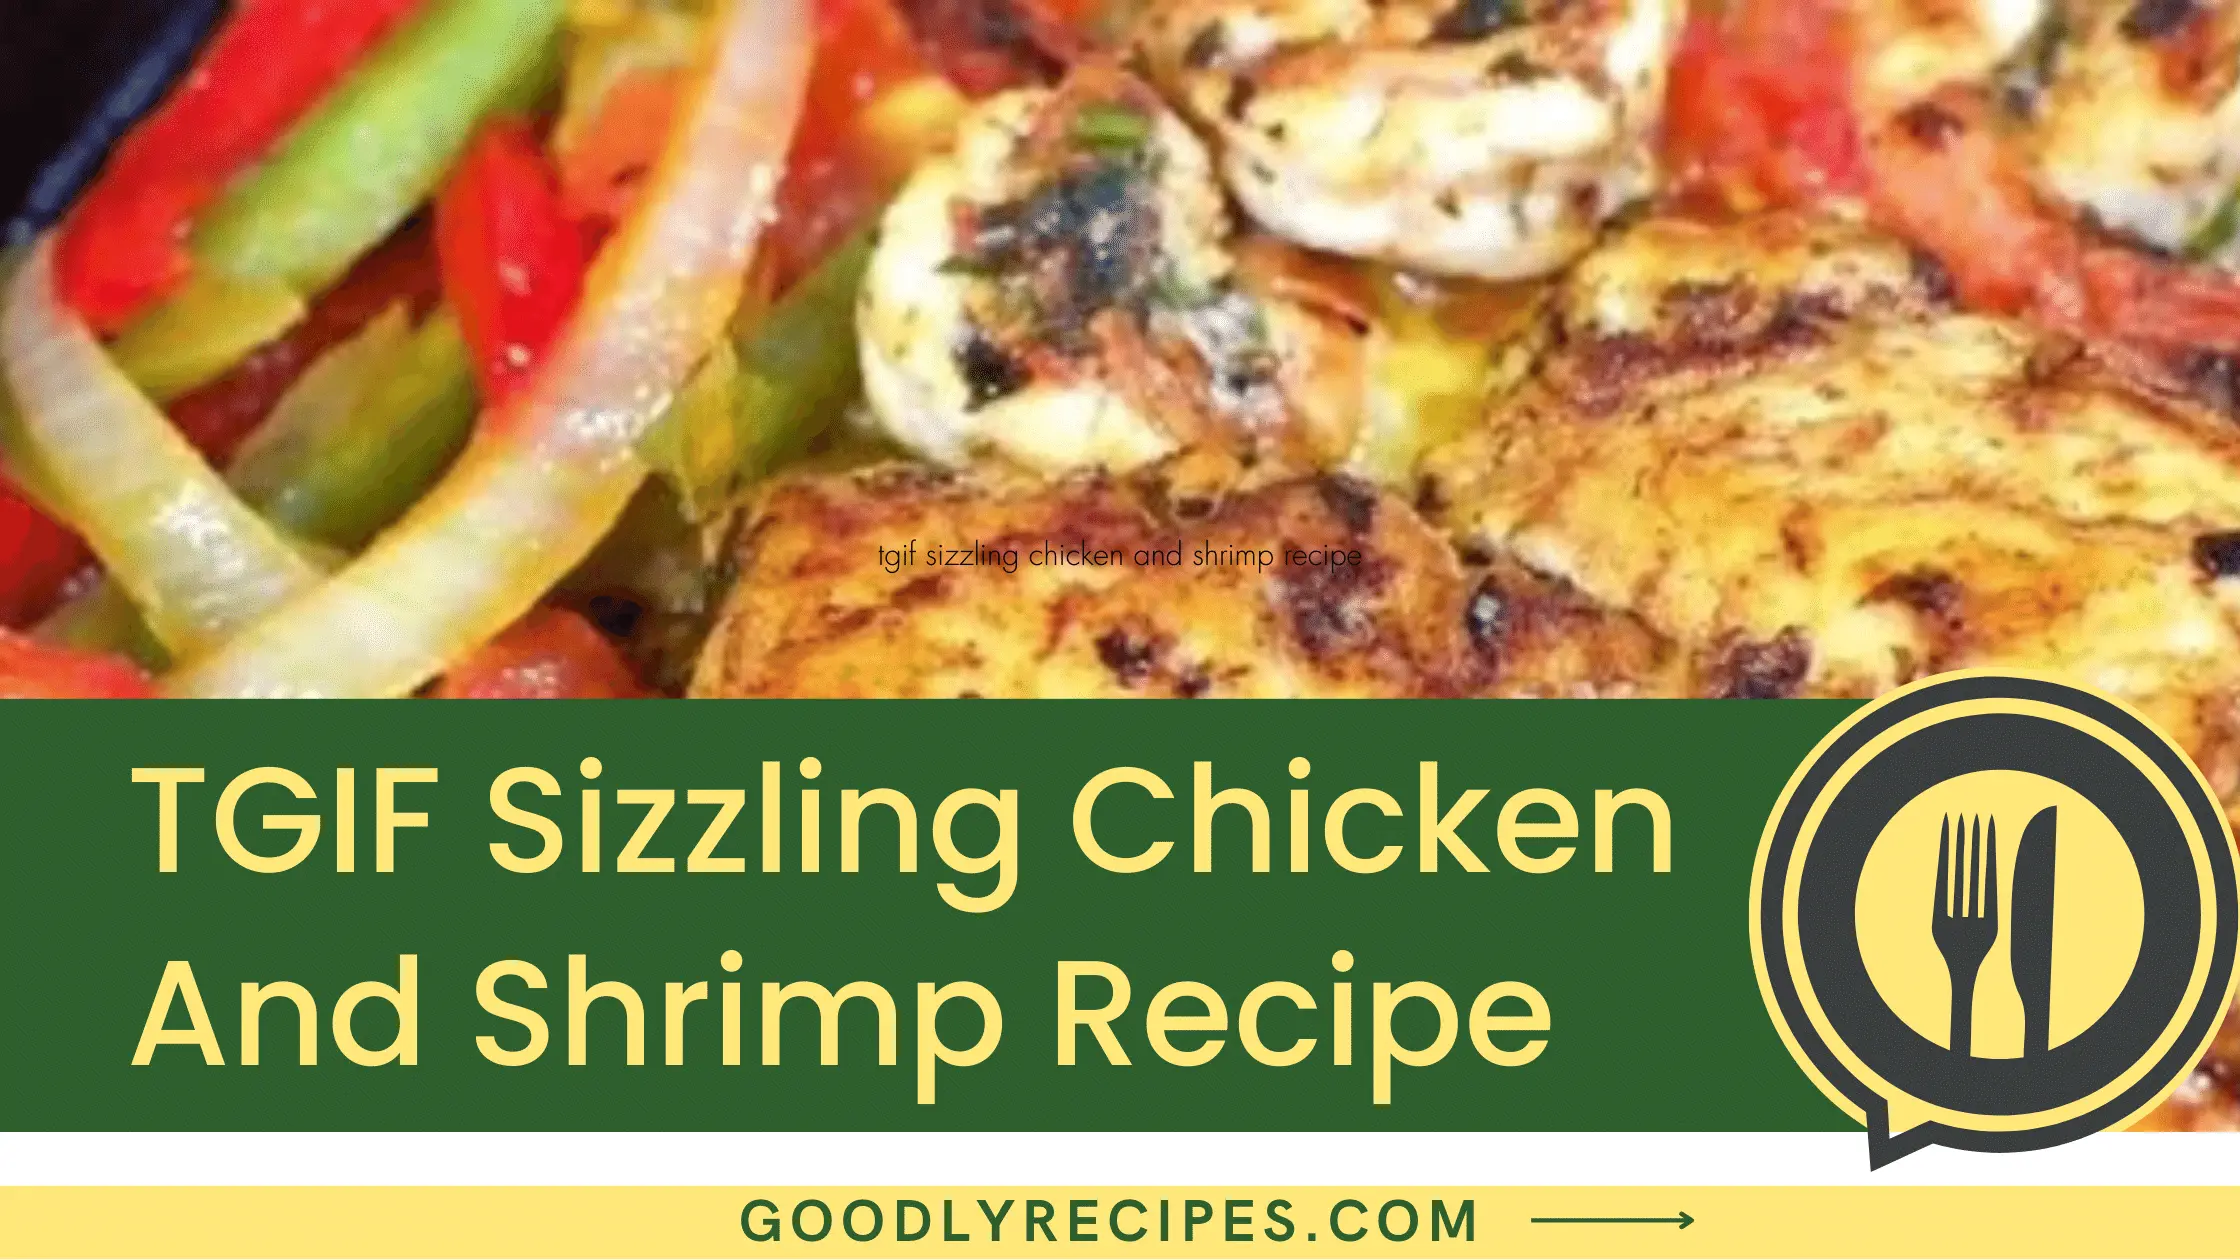 Tgif Sizzling Chicken and Shrimp Recipe